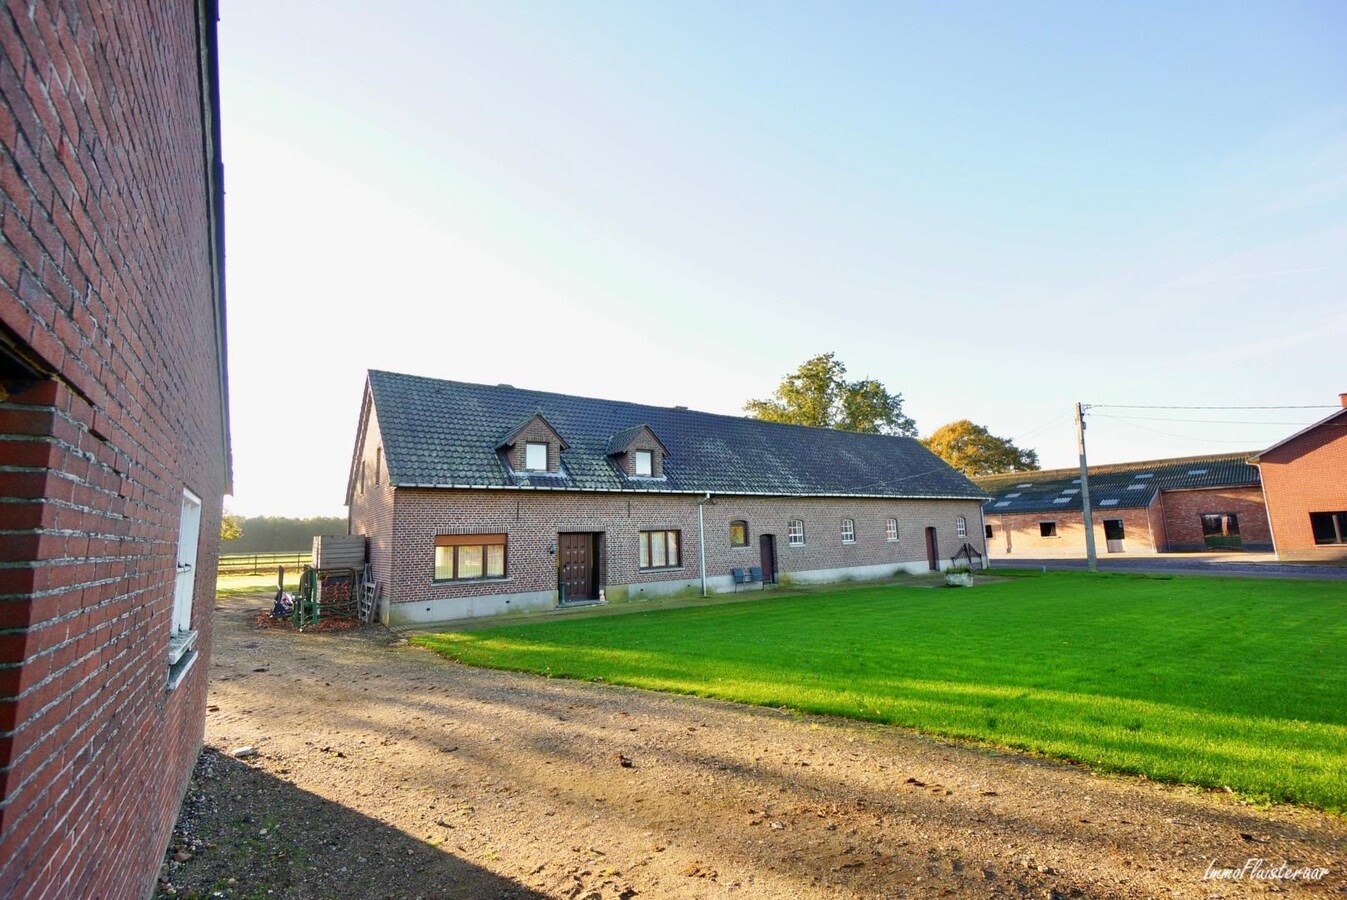 Property for sale in Bocholt